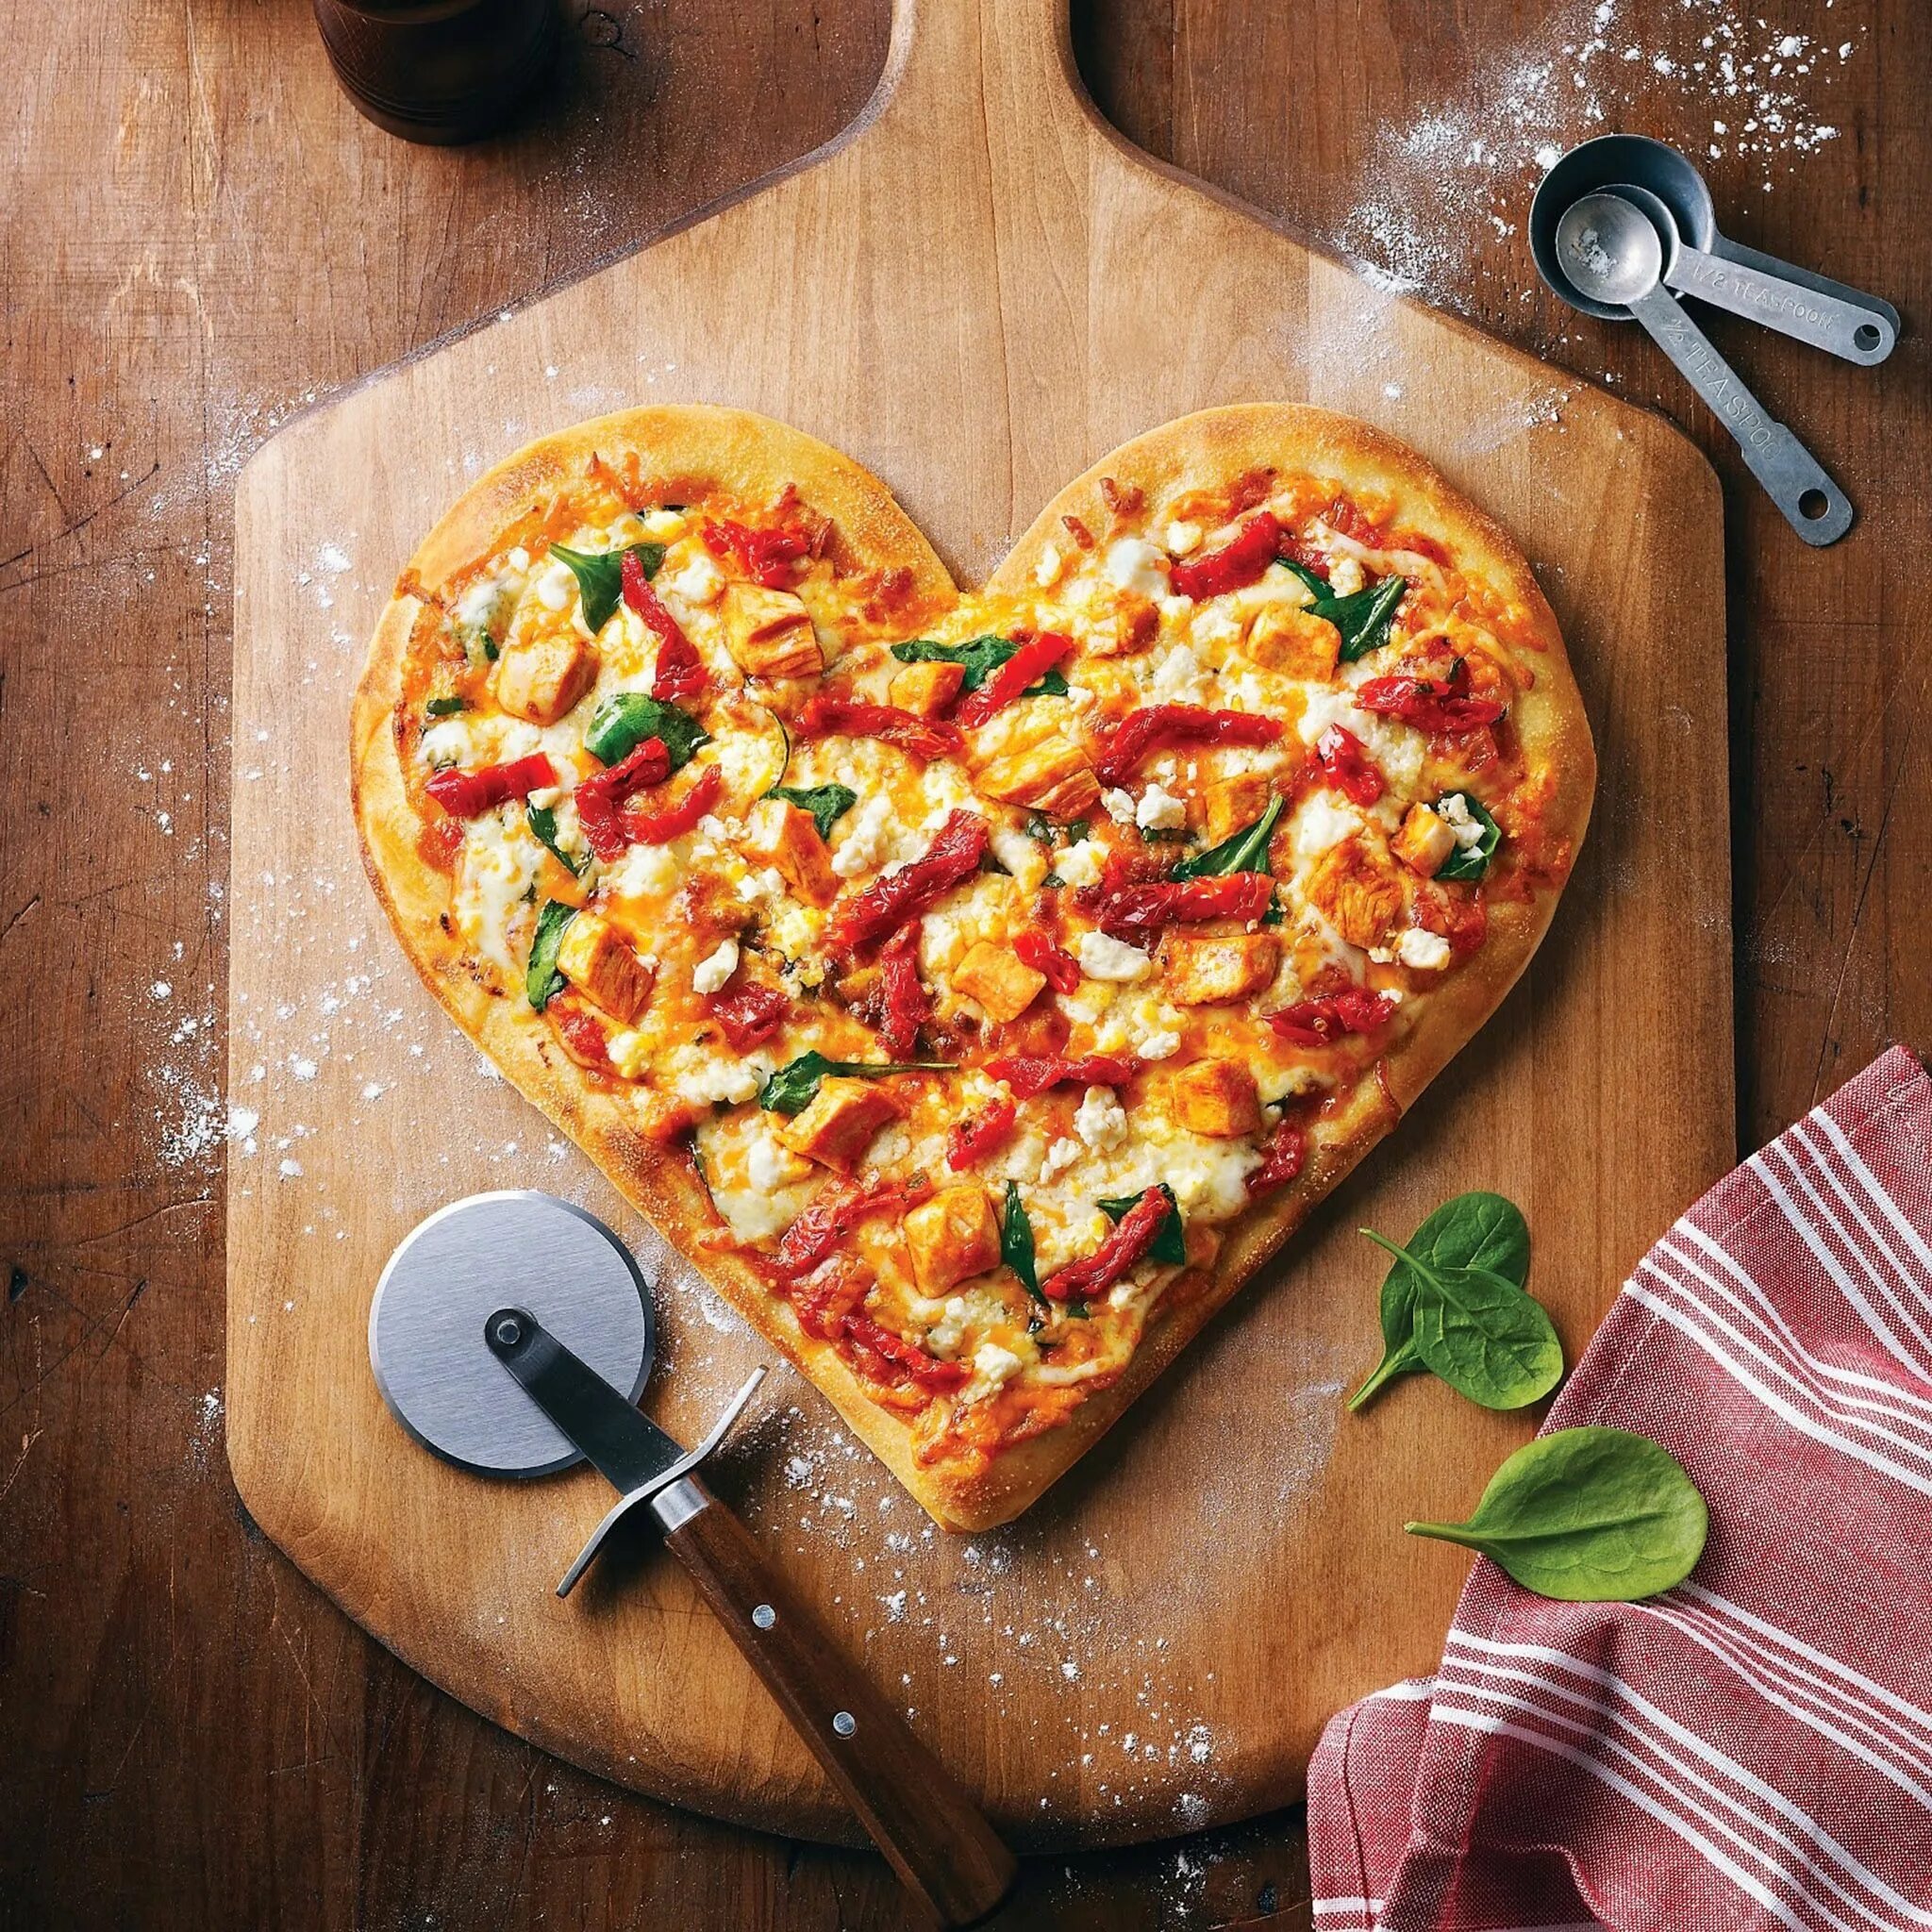 Самая вкусная страница. "Пицца". Пицца в виде сердечка. Пицца в форме сердечка. \Пицца в ви де сербдечка.